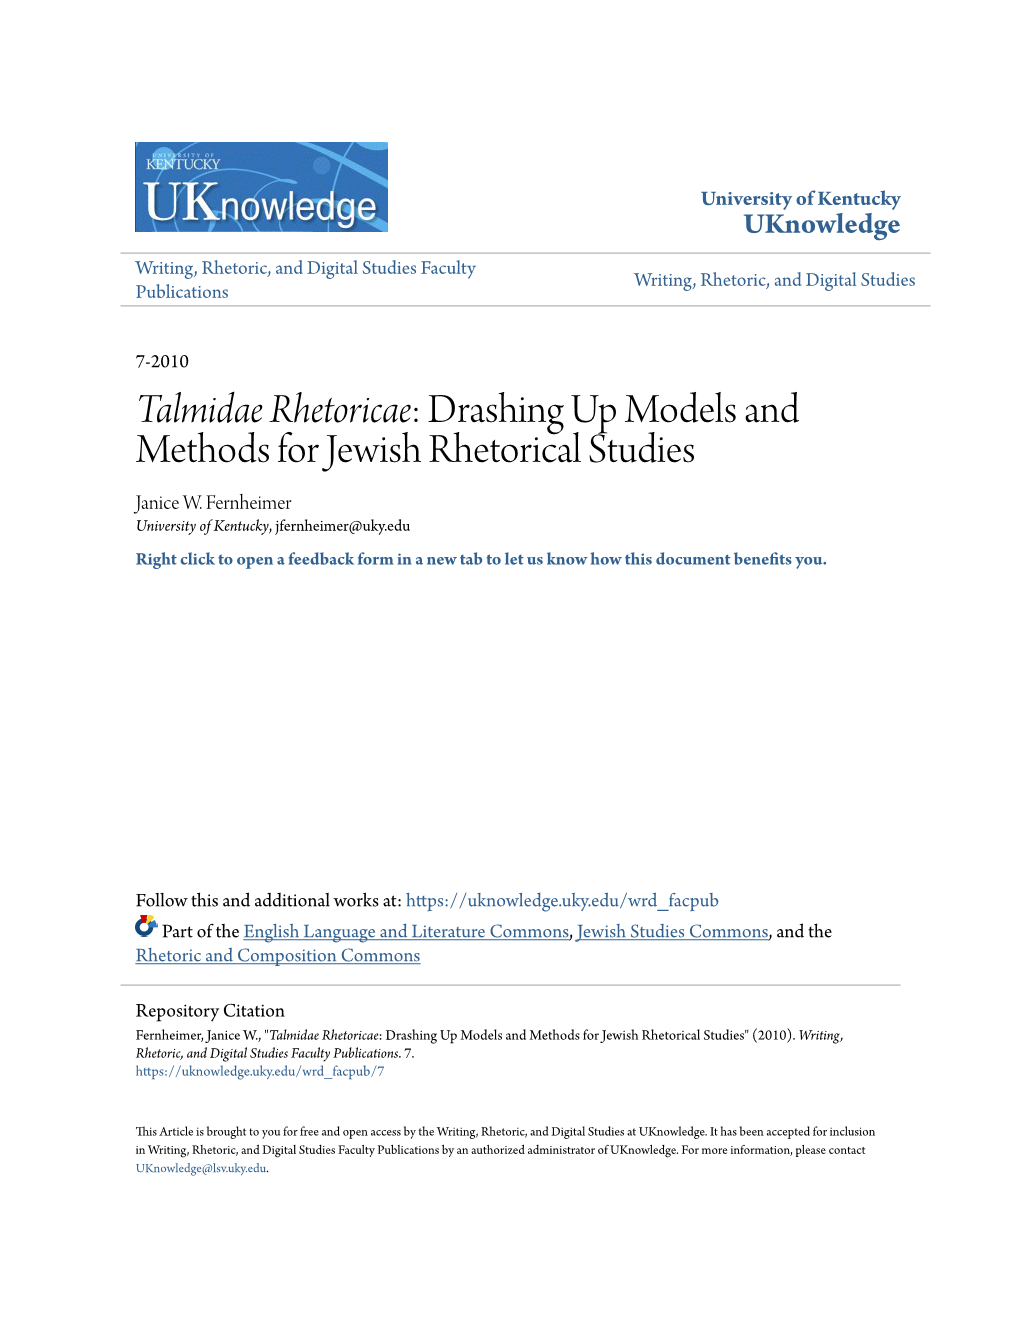 Drashing up Models and Methods for Jewish Rhetorical Studies Janice W